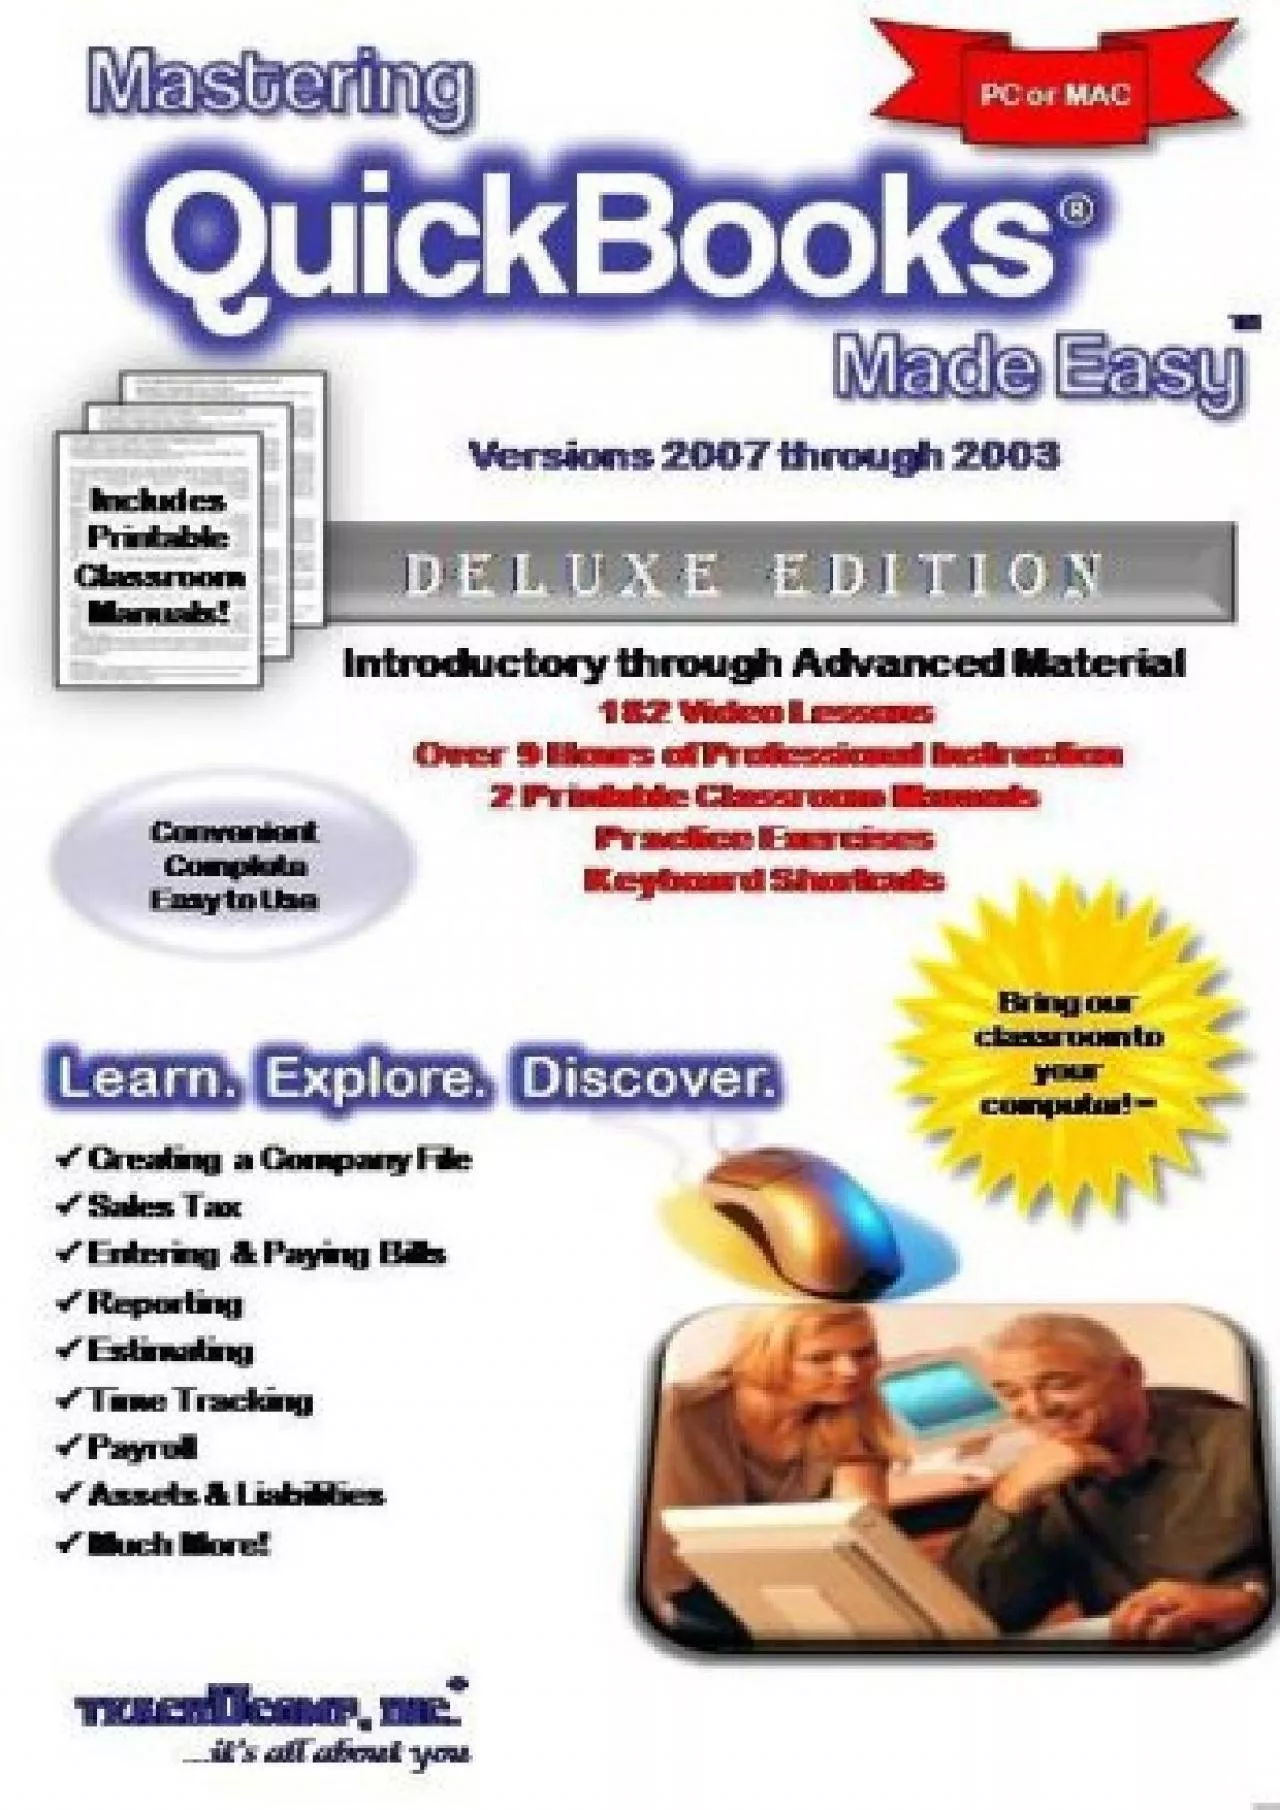 (BOOK)-Mastering QuickBooks Made Easy Training Tutorial v. 2007 through 2003 - How to